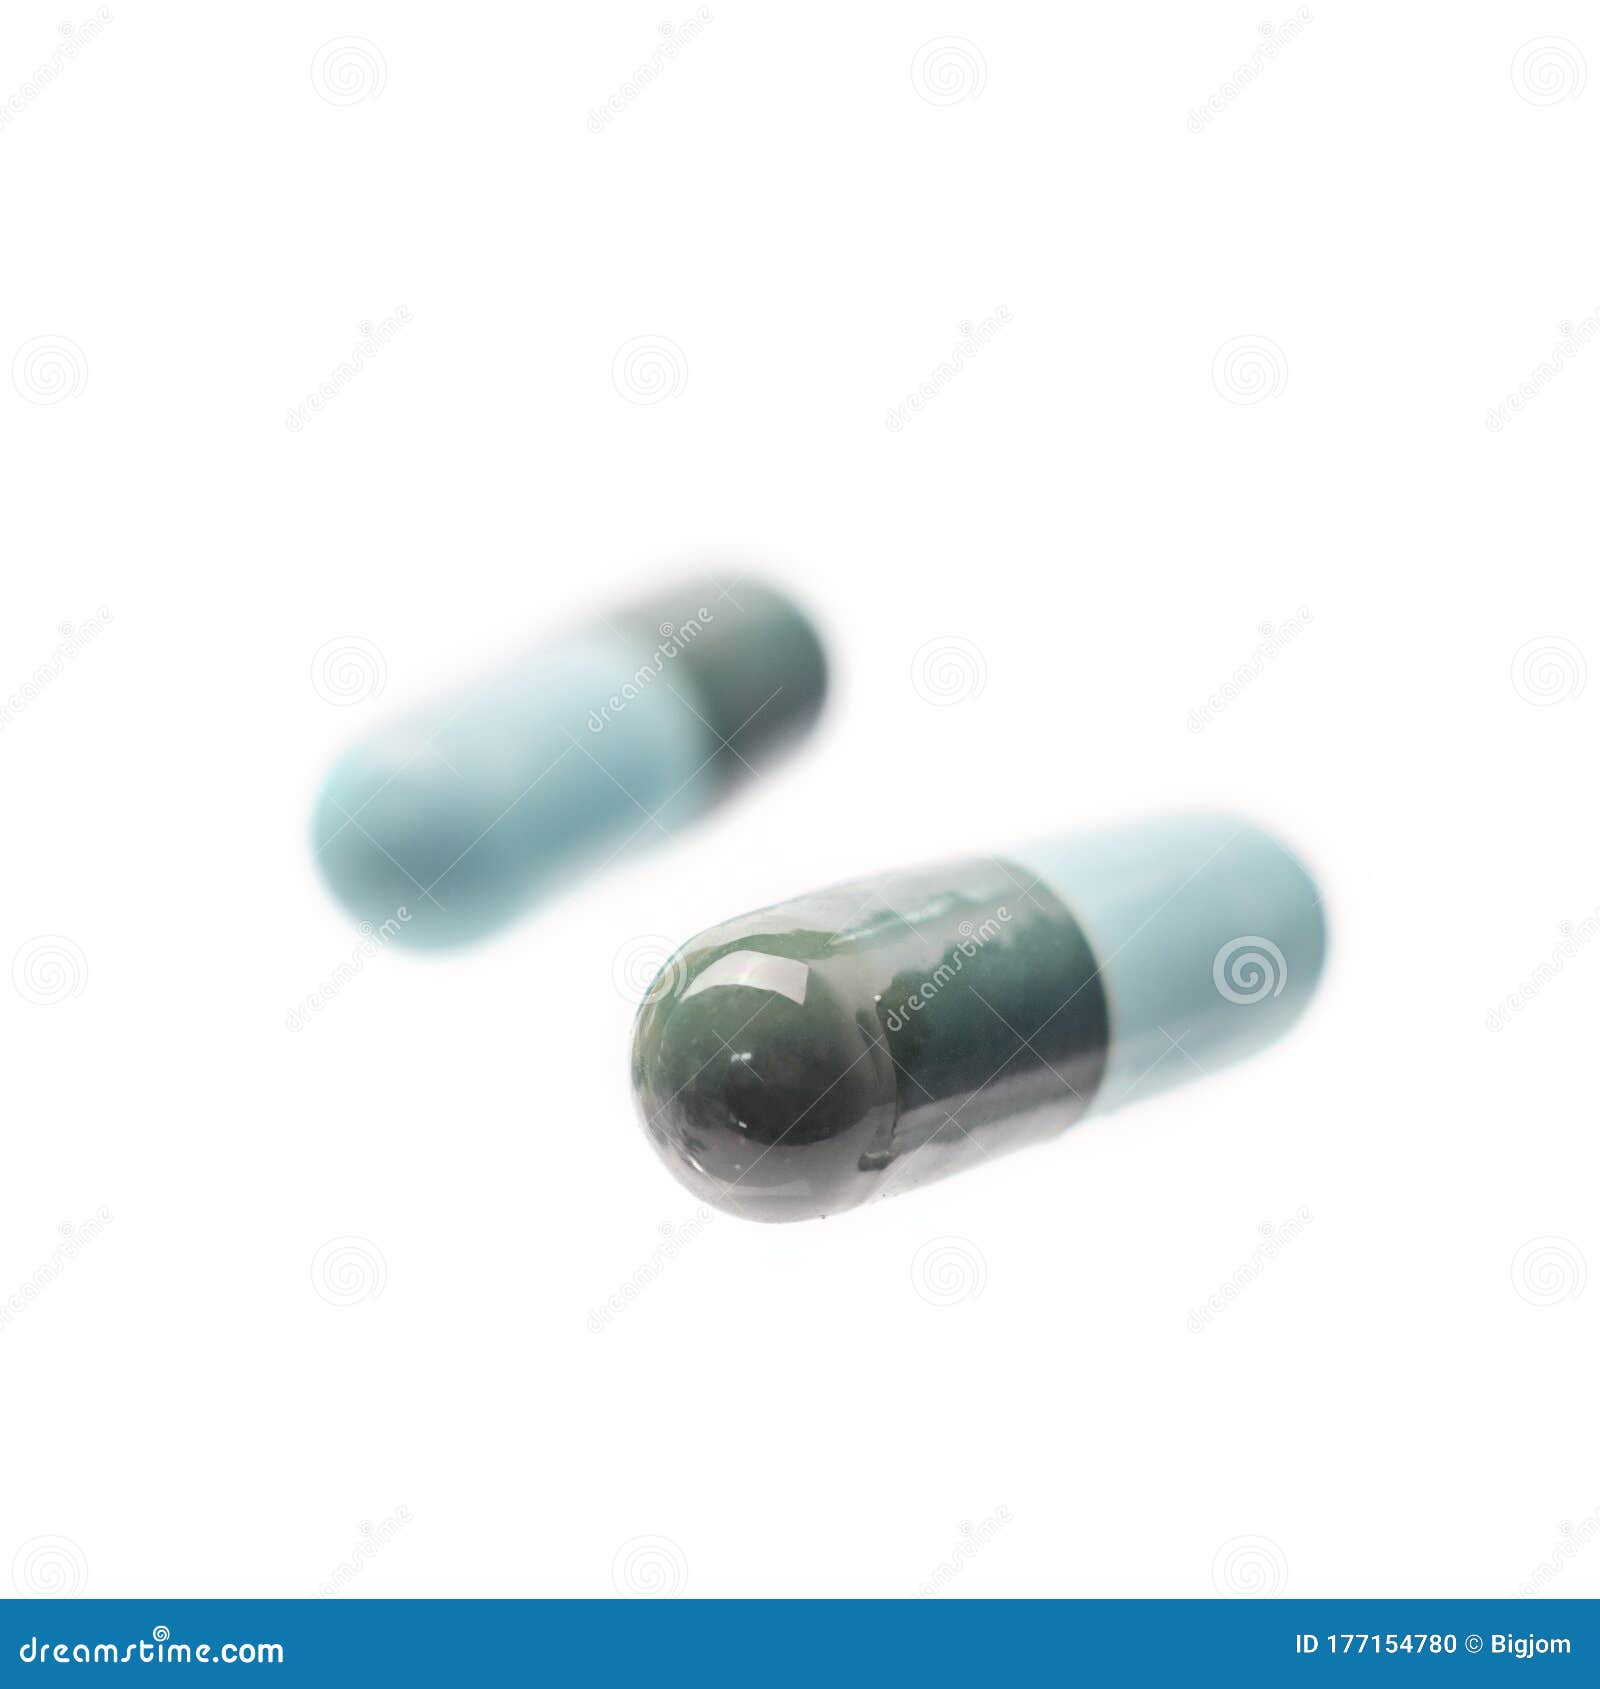 capsules of medicine for anti biotic, blue and green capsules